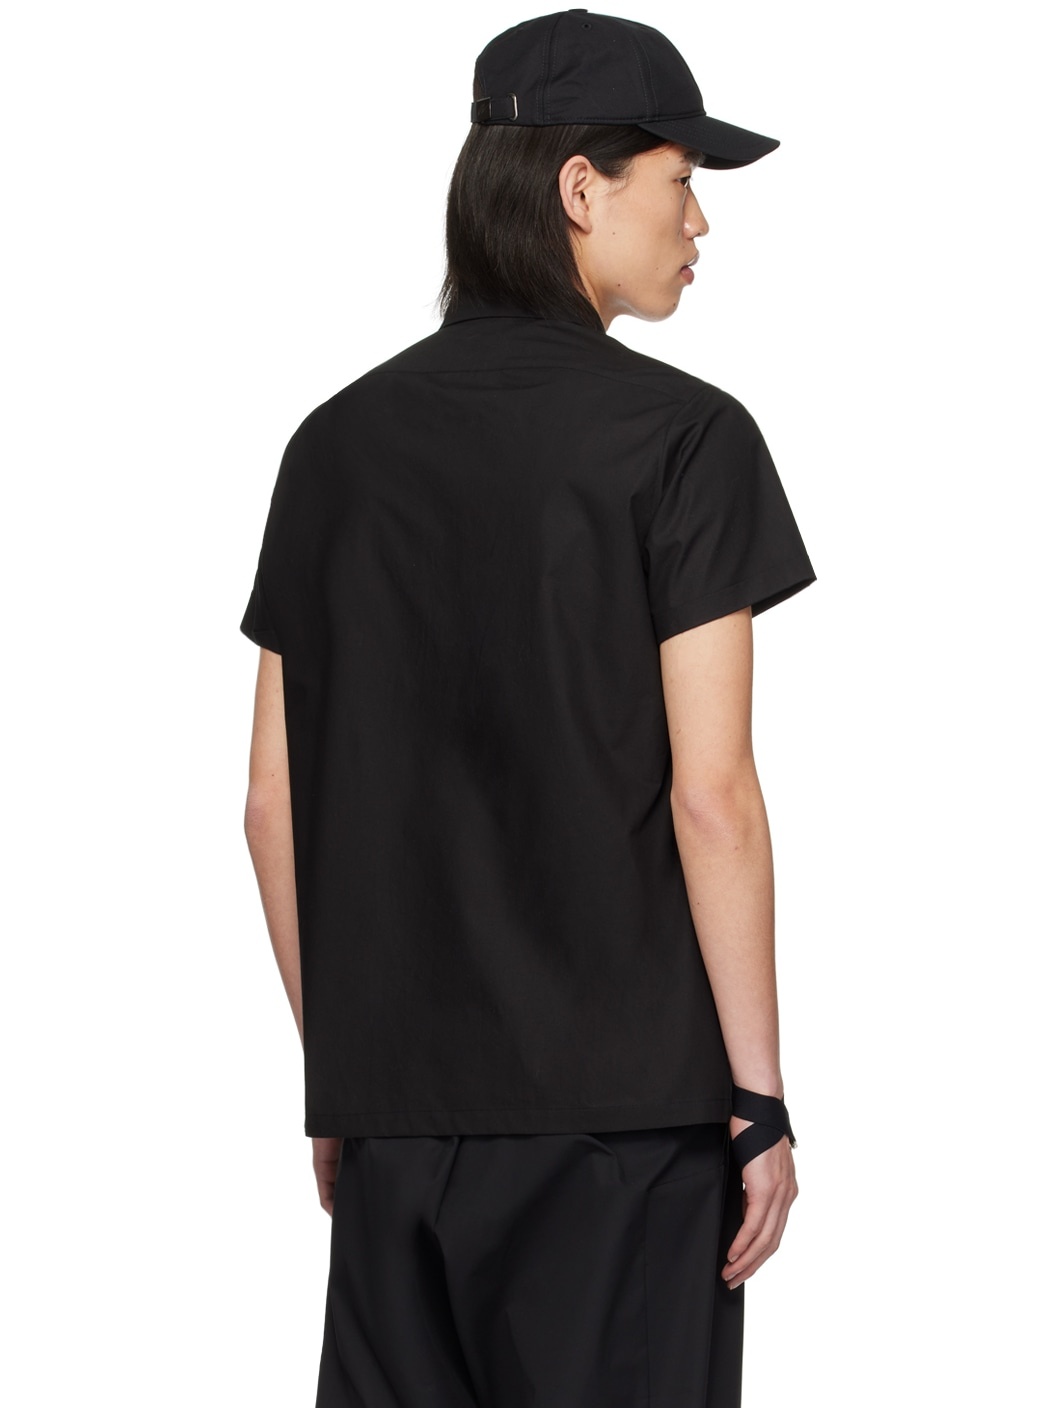 Black Pin Shirt - 3